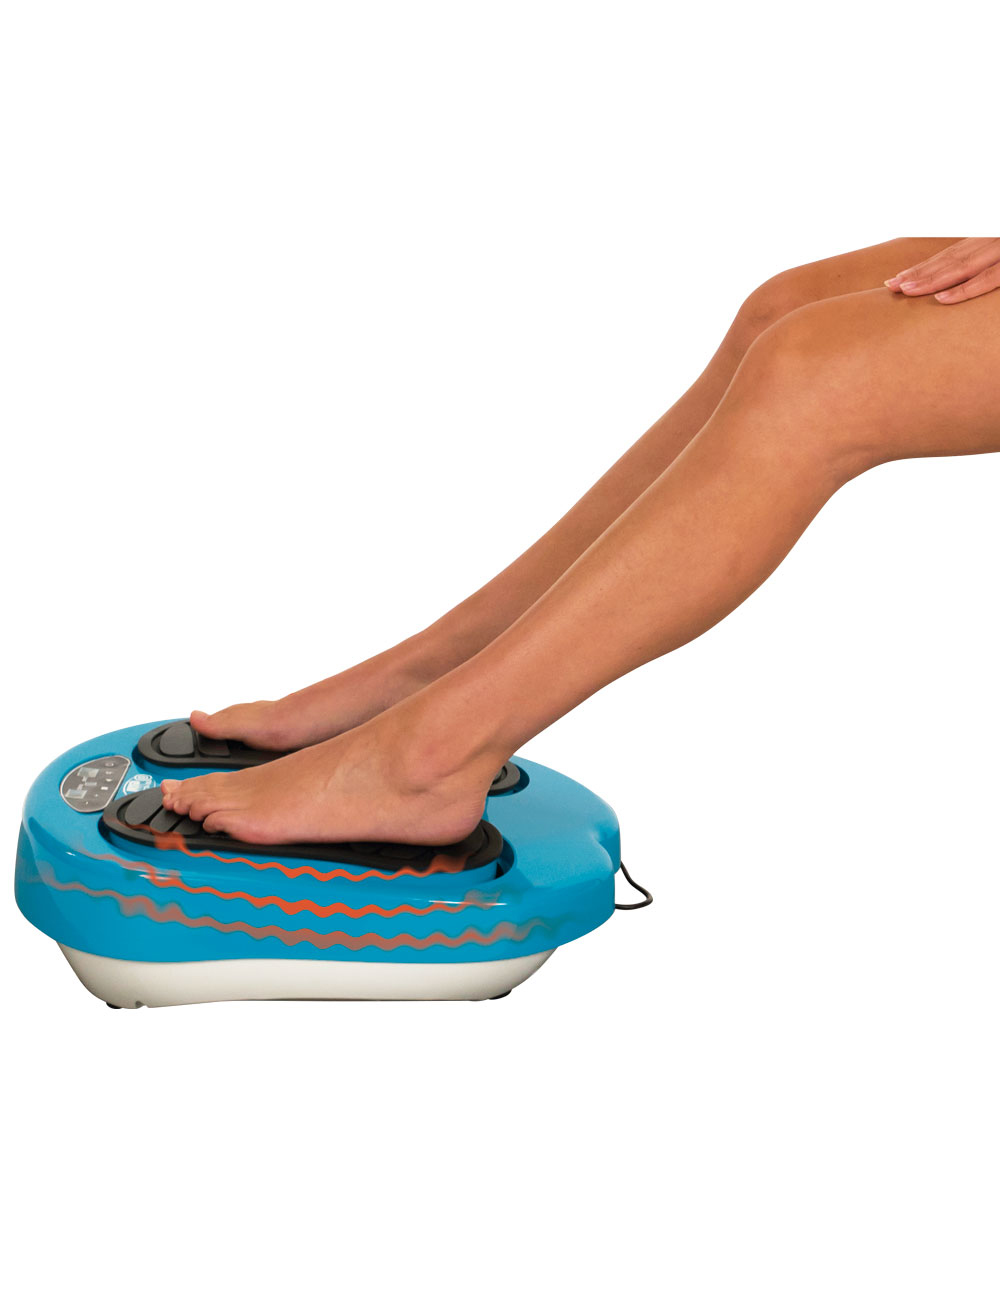 gymform-leg-action-appareil-massage-shiatsu-pieds